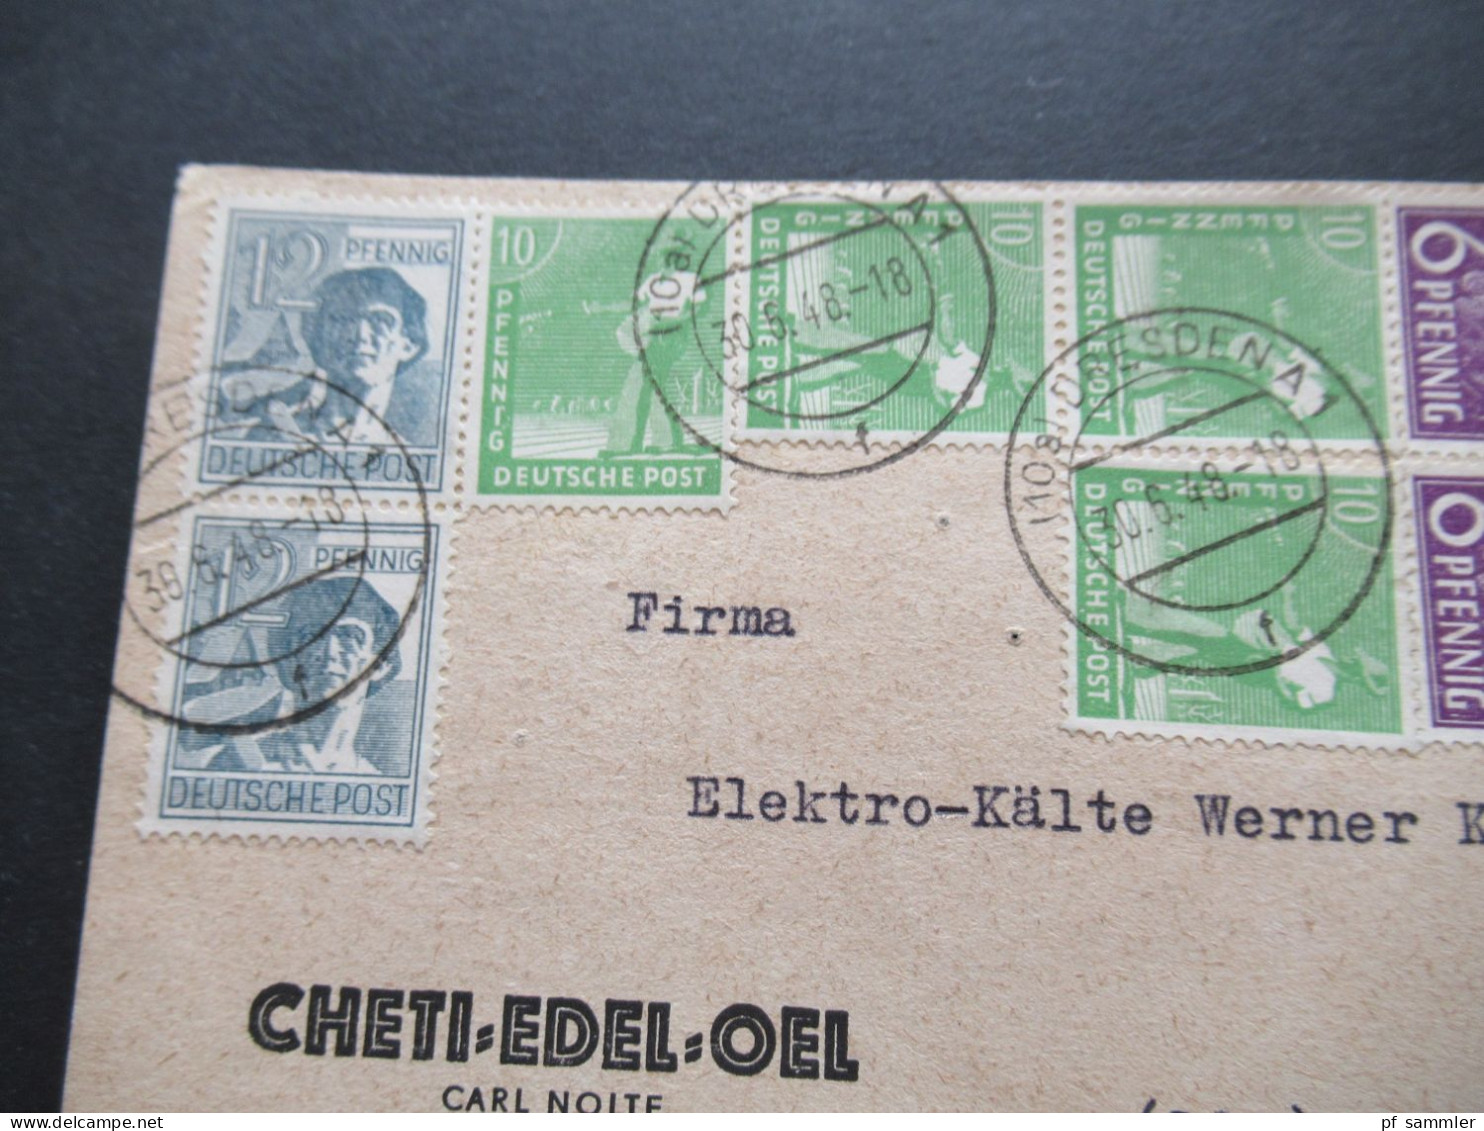 SBZ Währungsreform ZF Zehnfachfrankatur 30.6.1948 Orts PK Dresden Firmen PK Cheti Edel Oel Carl Nolte Dresden A 5 - Lettres & Documents